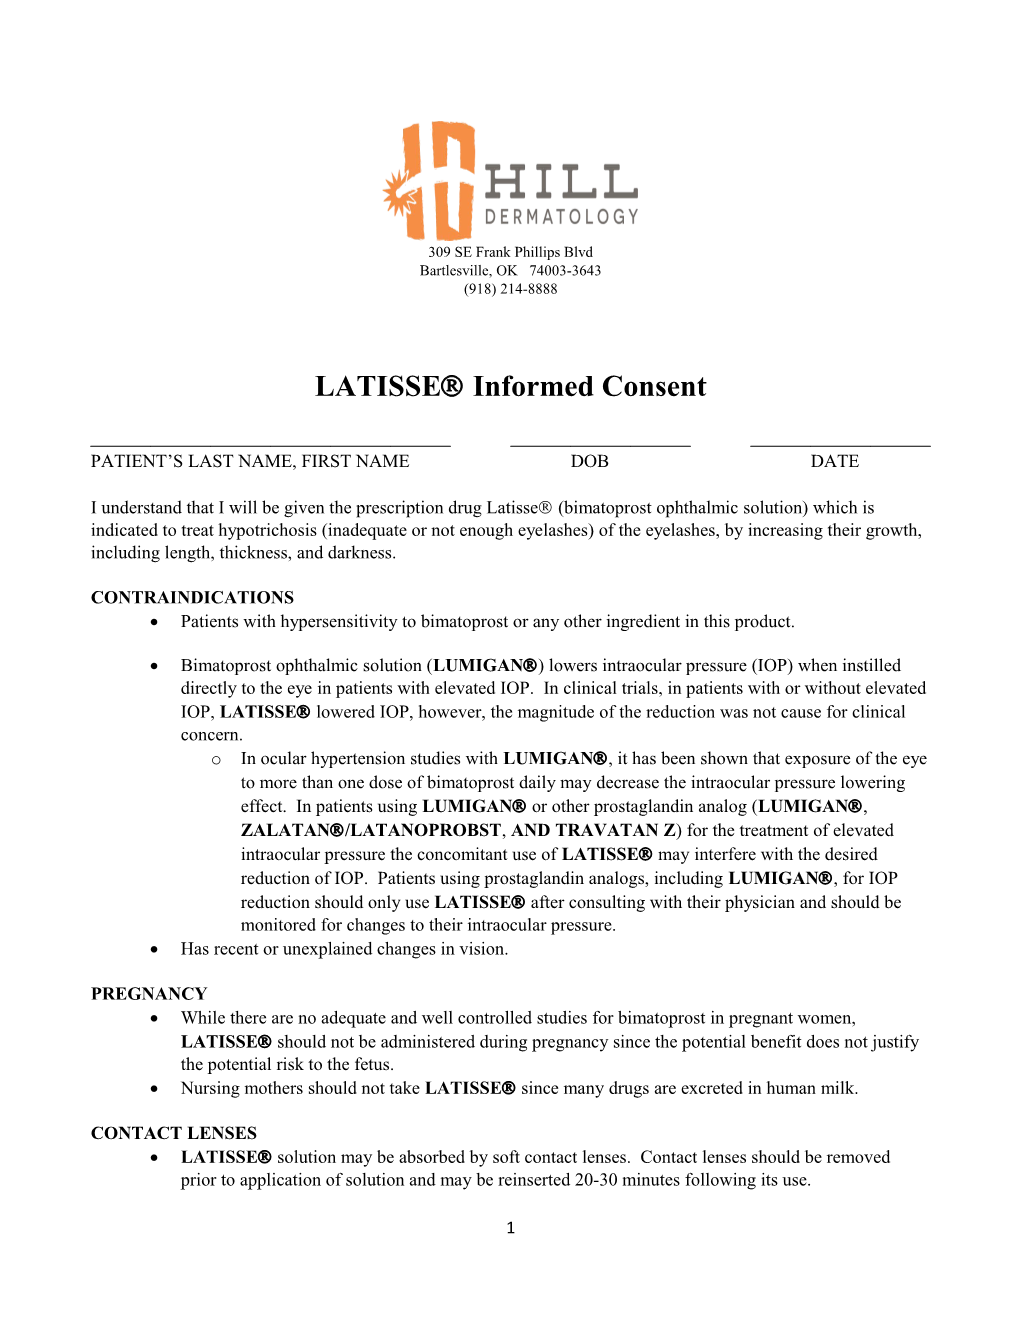 LATISSE Informed Consent